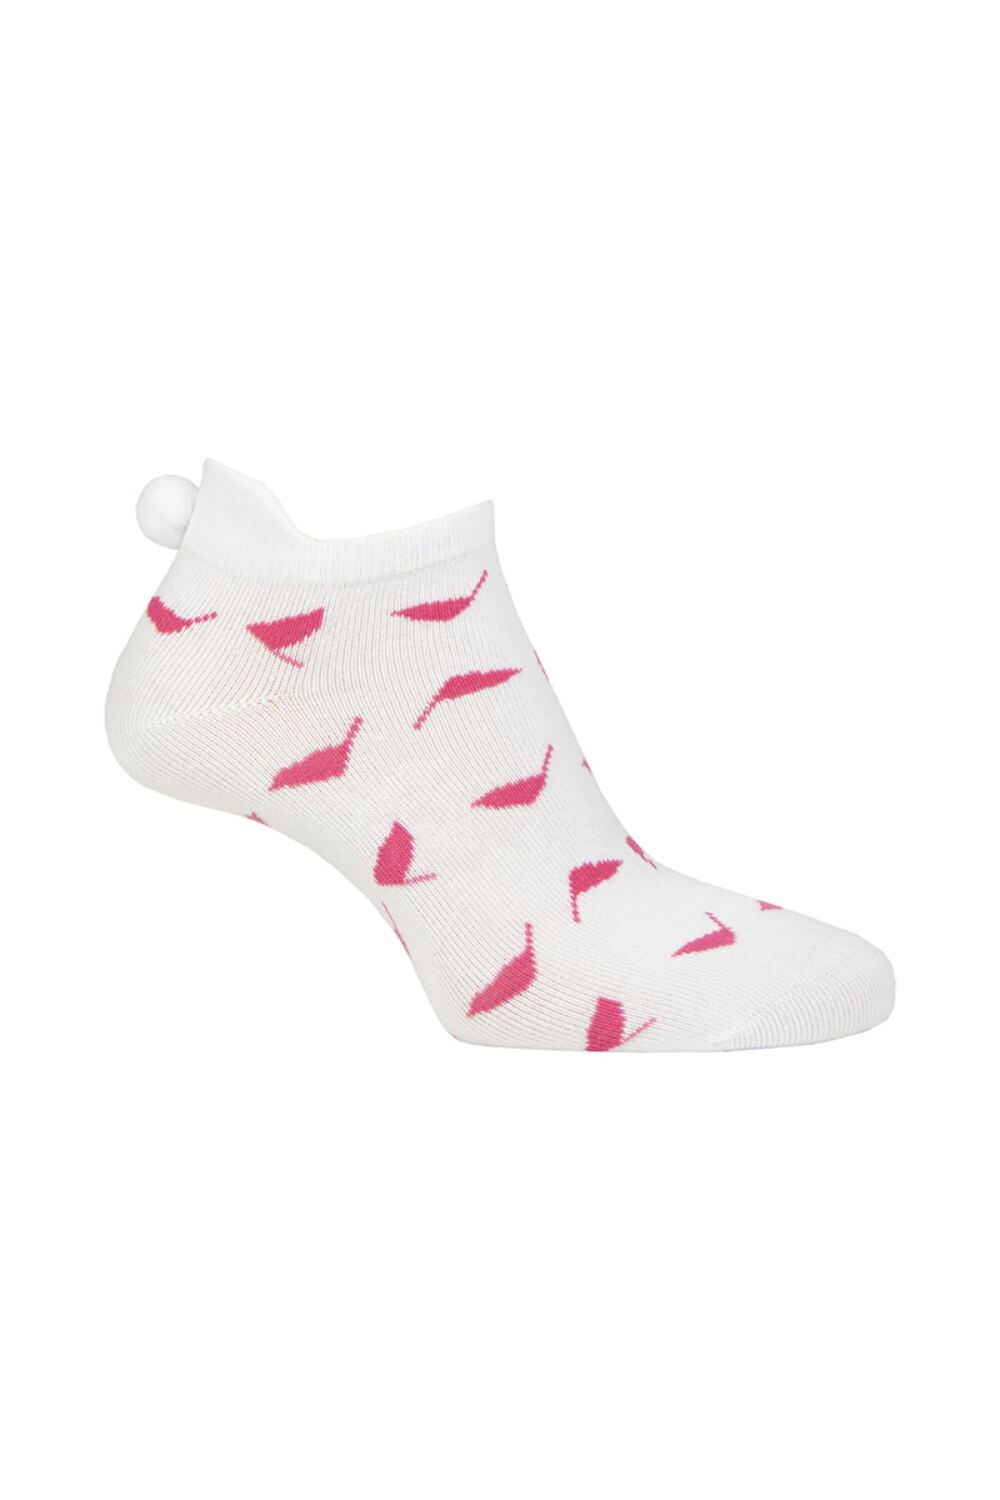 Glenmuir Ladies Patterned Eugenie Secret Socks